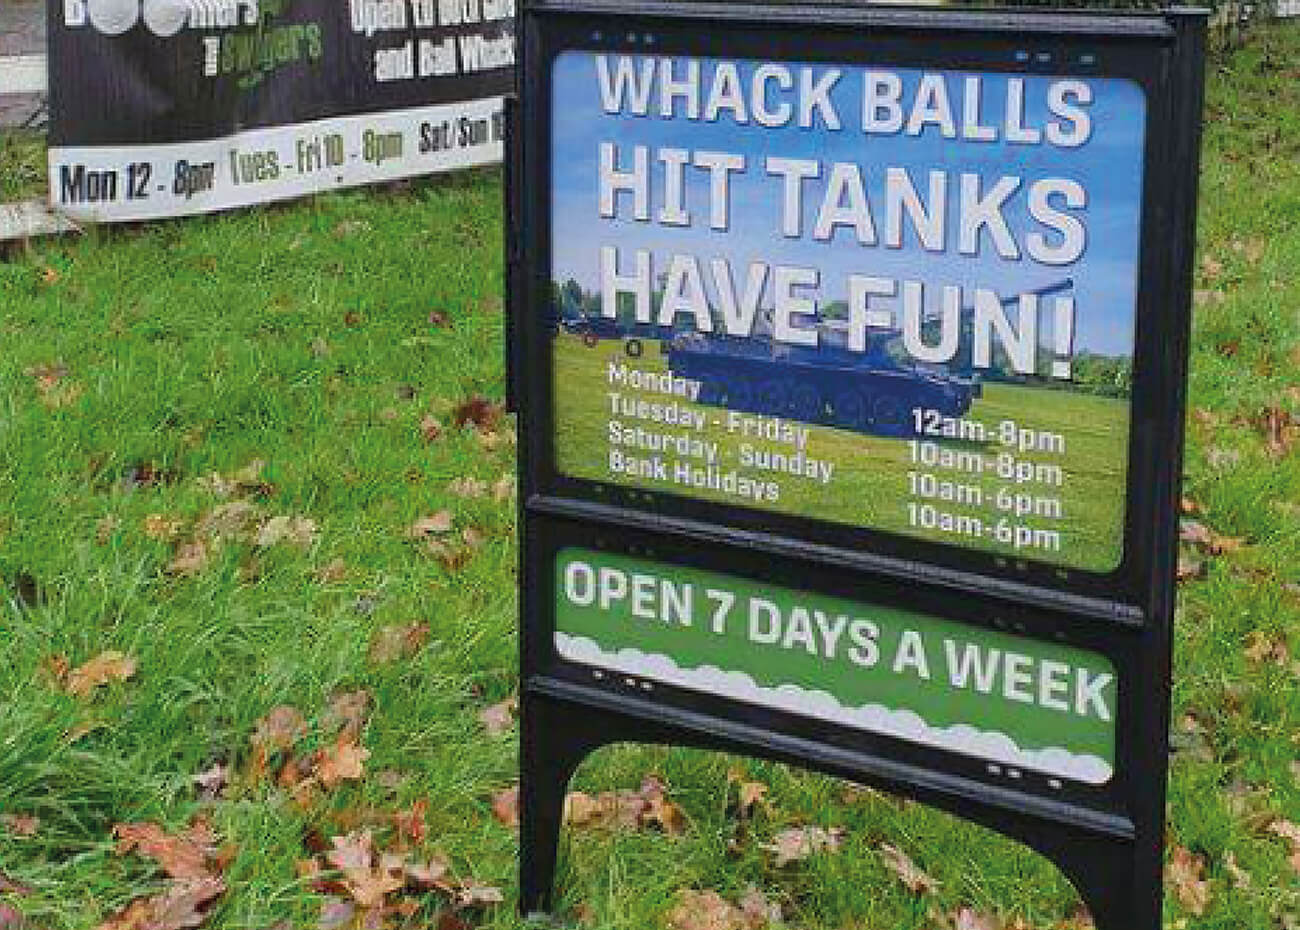 Hit tanks signage